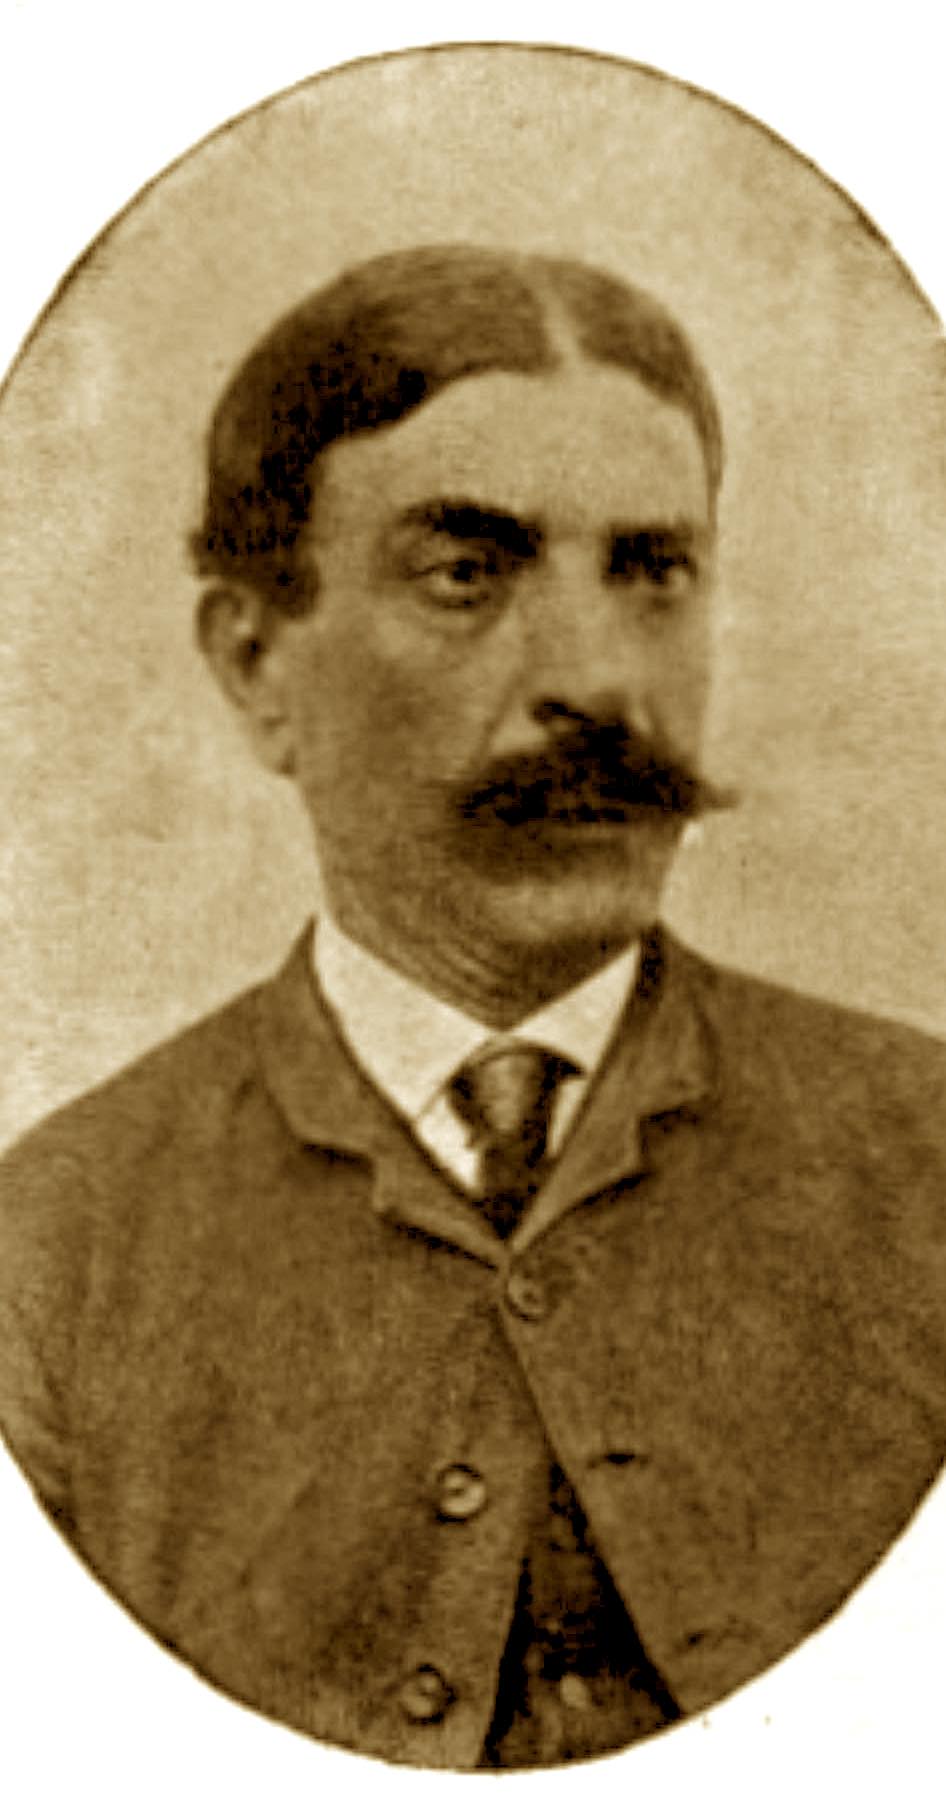 Zef (Giuseppe) Serembe (1844-1901)